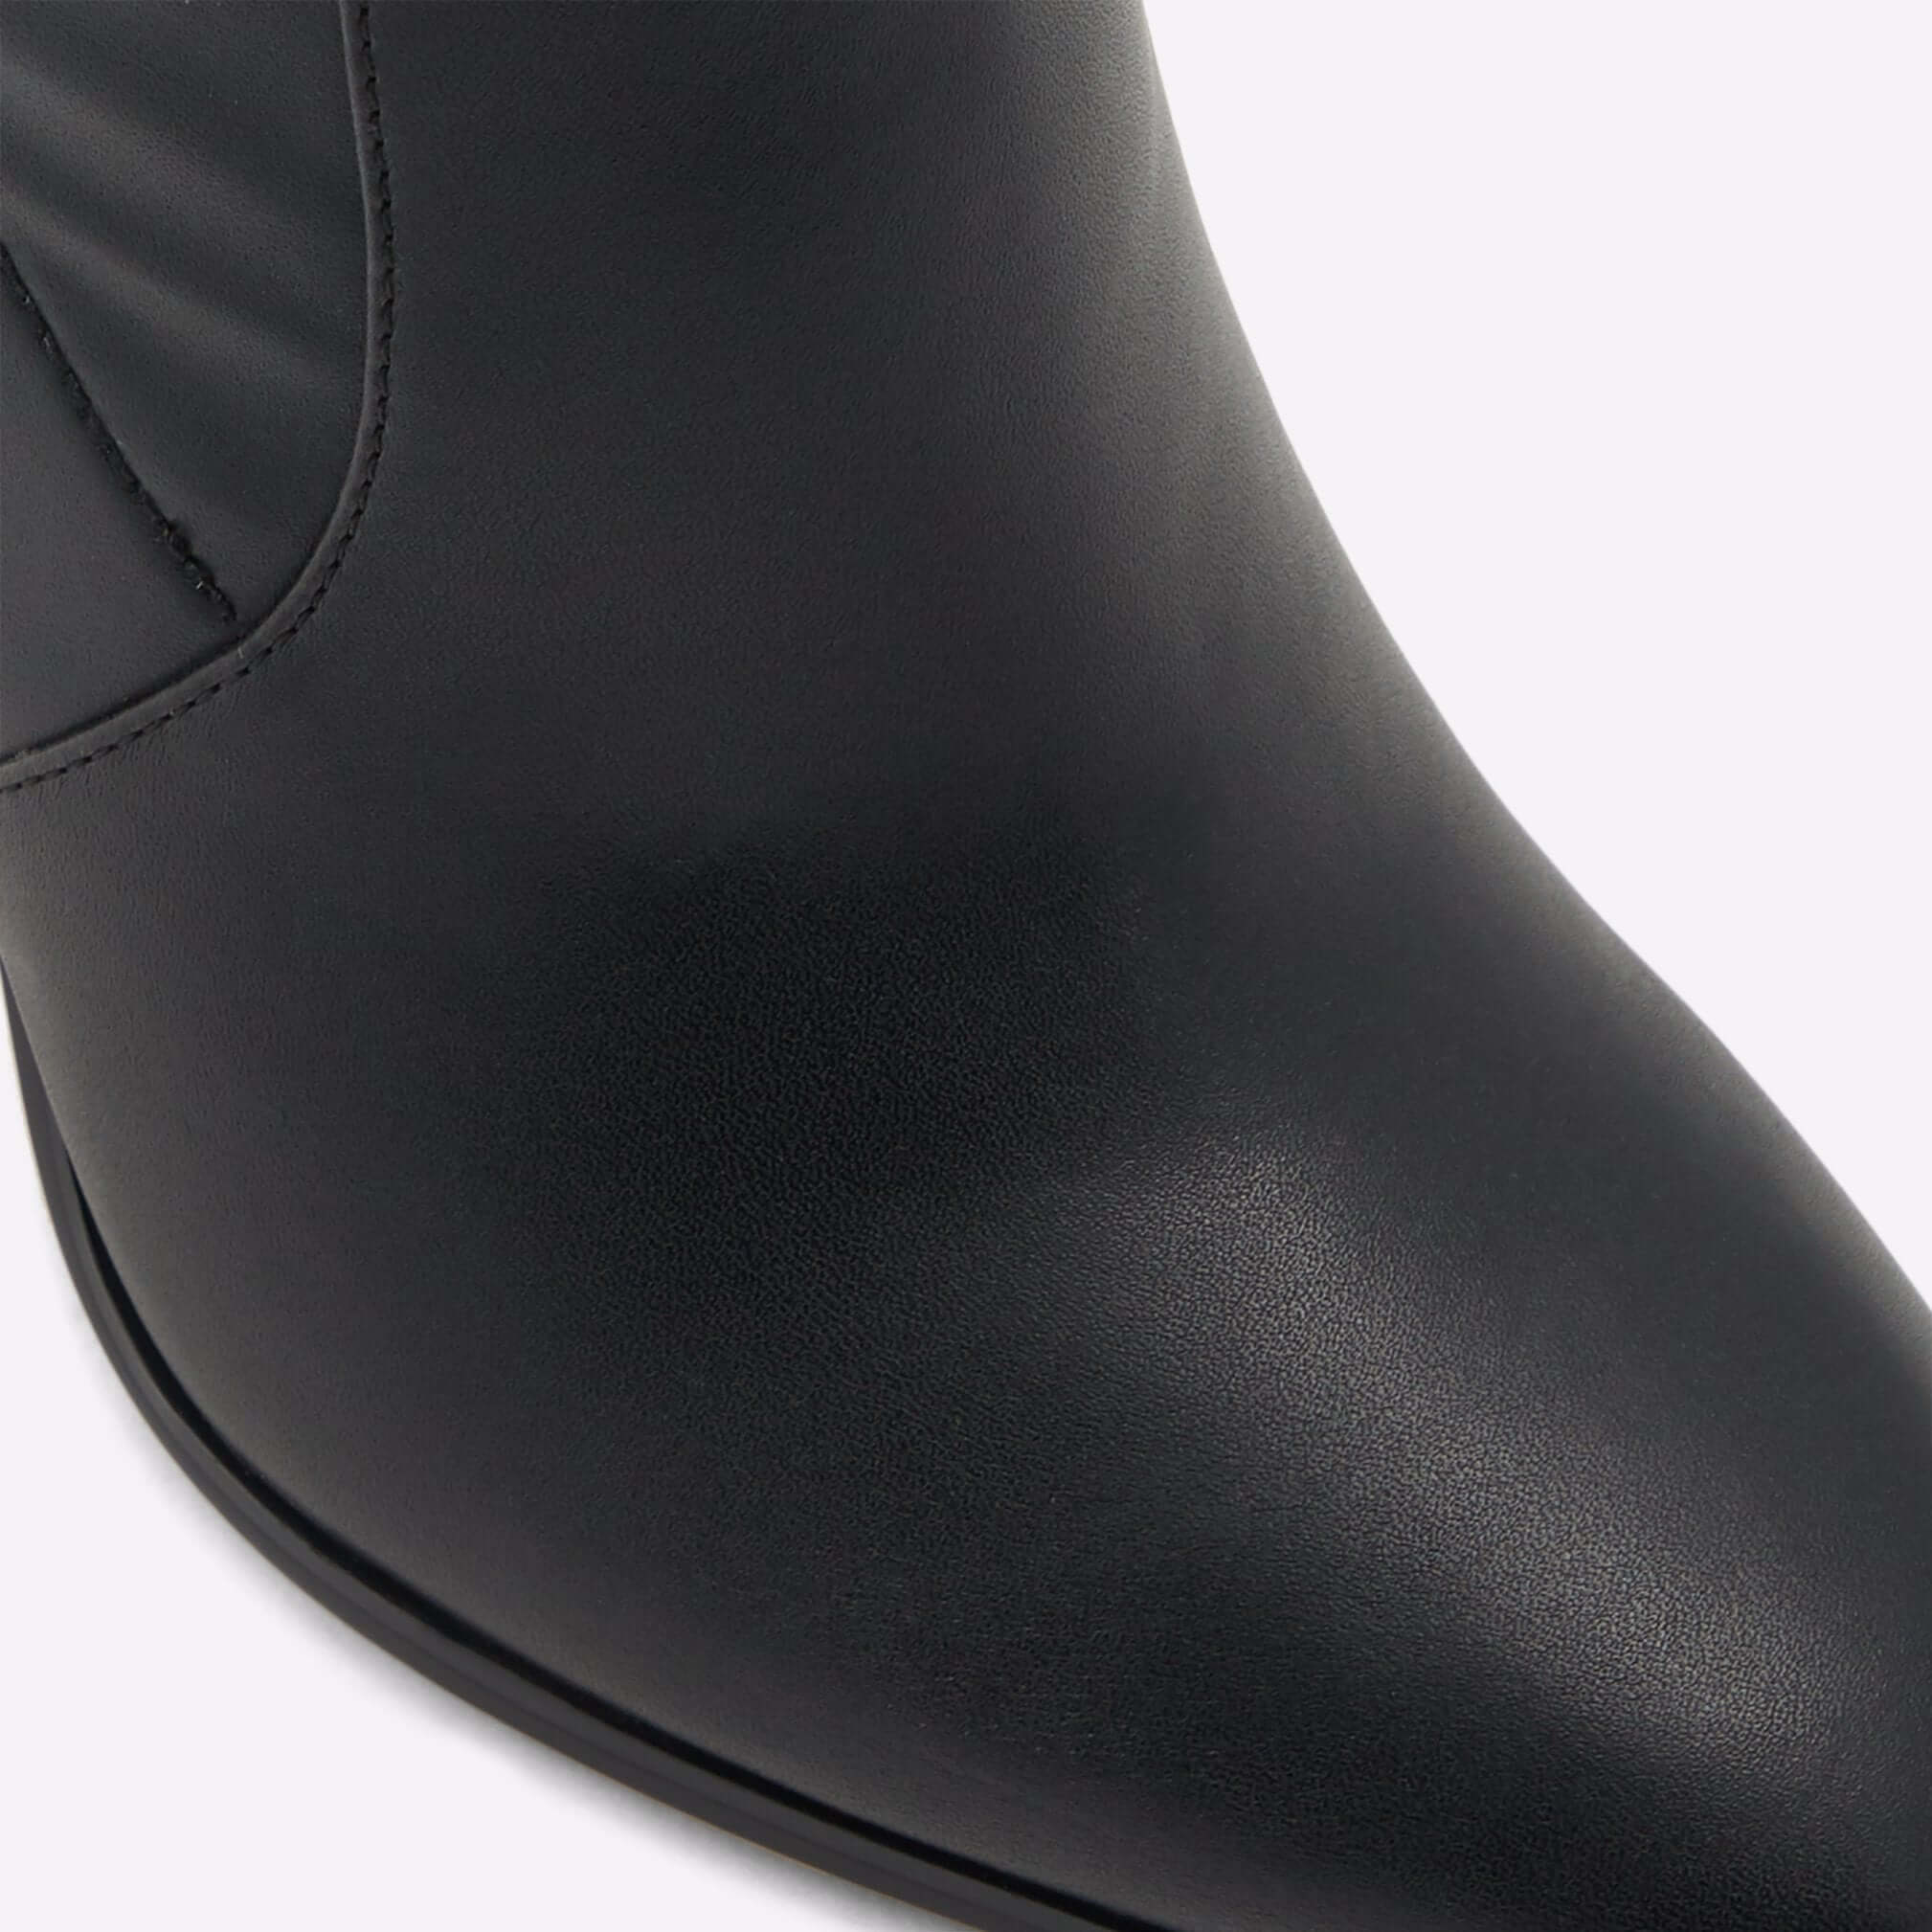 Aldo Women's Heeled Ankle Boot Aurellieflex (Black) – ALDO Shoes UK